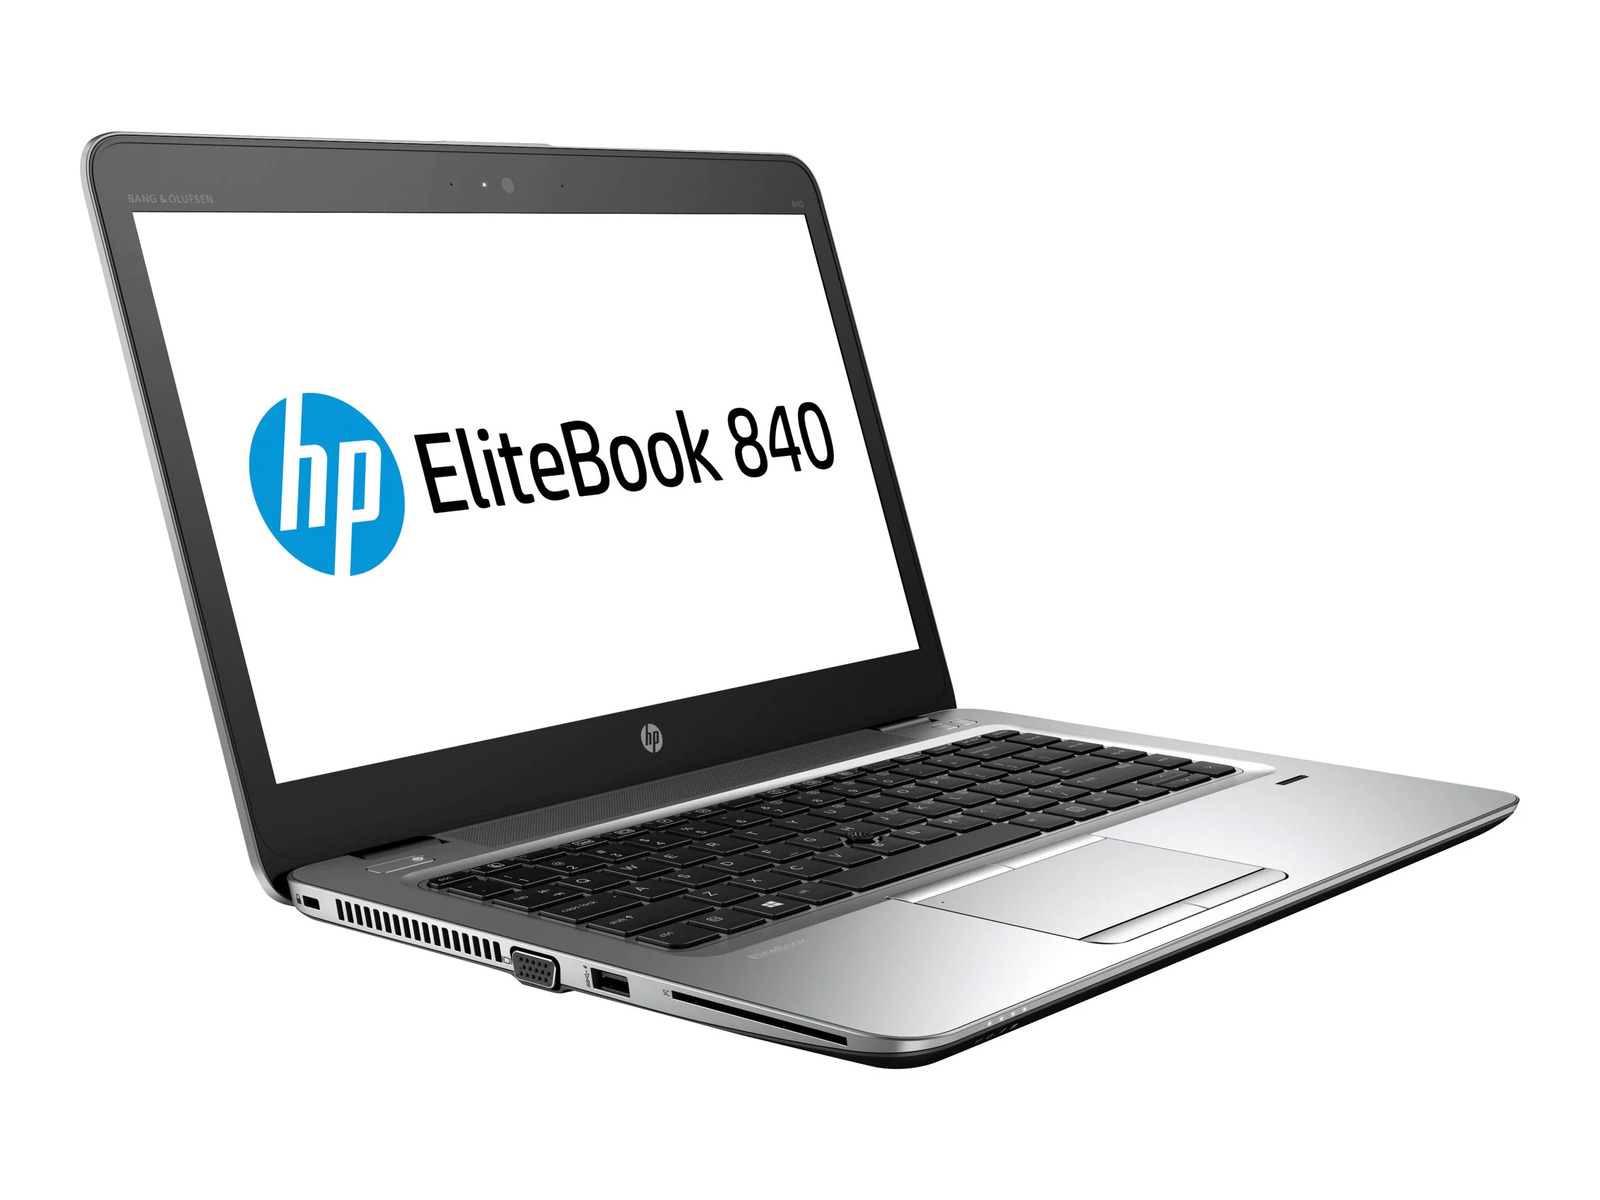 HP EliteBook 840 G3 Intel i5 6300U 2.40GHz 8GB RAM 128GB SSD 14" Win 10 Full Size Image